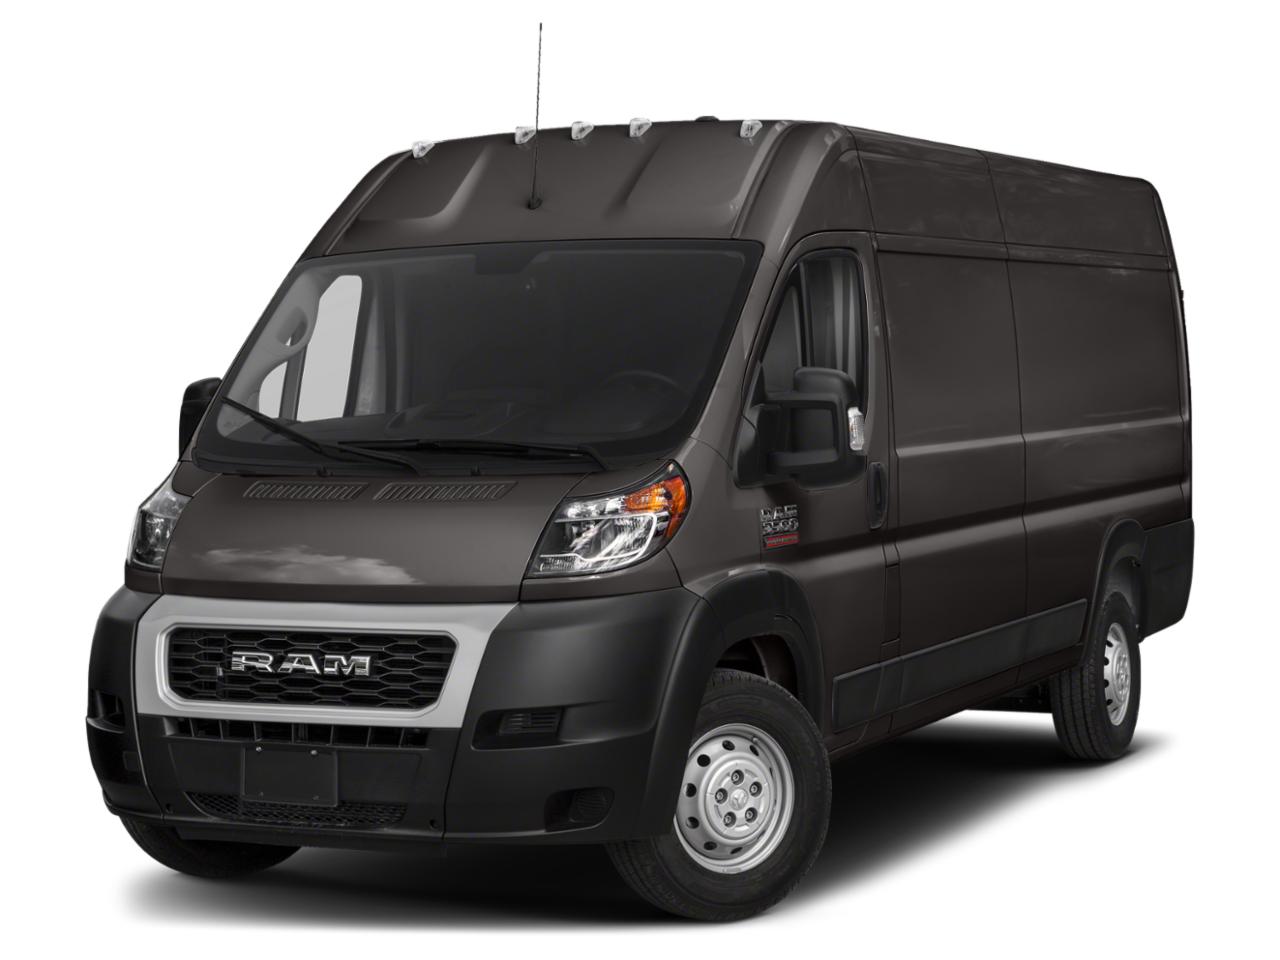 2021 Ram ProMaster Cargo Van Vehicle Photo in Saint Charles, IL 60174